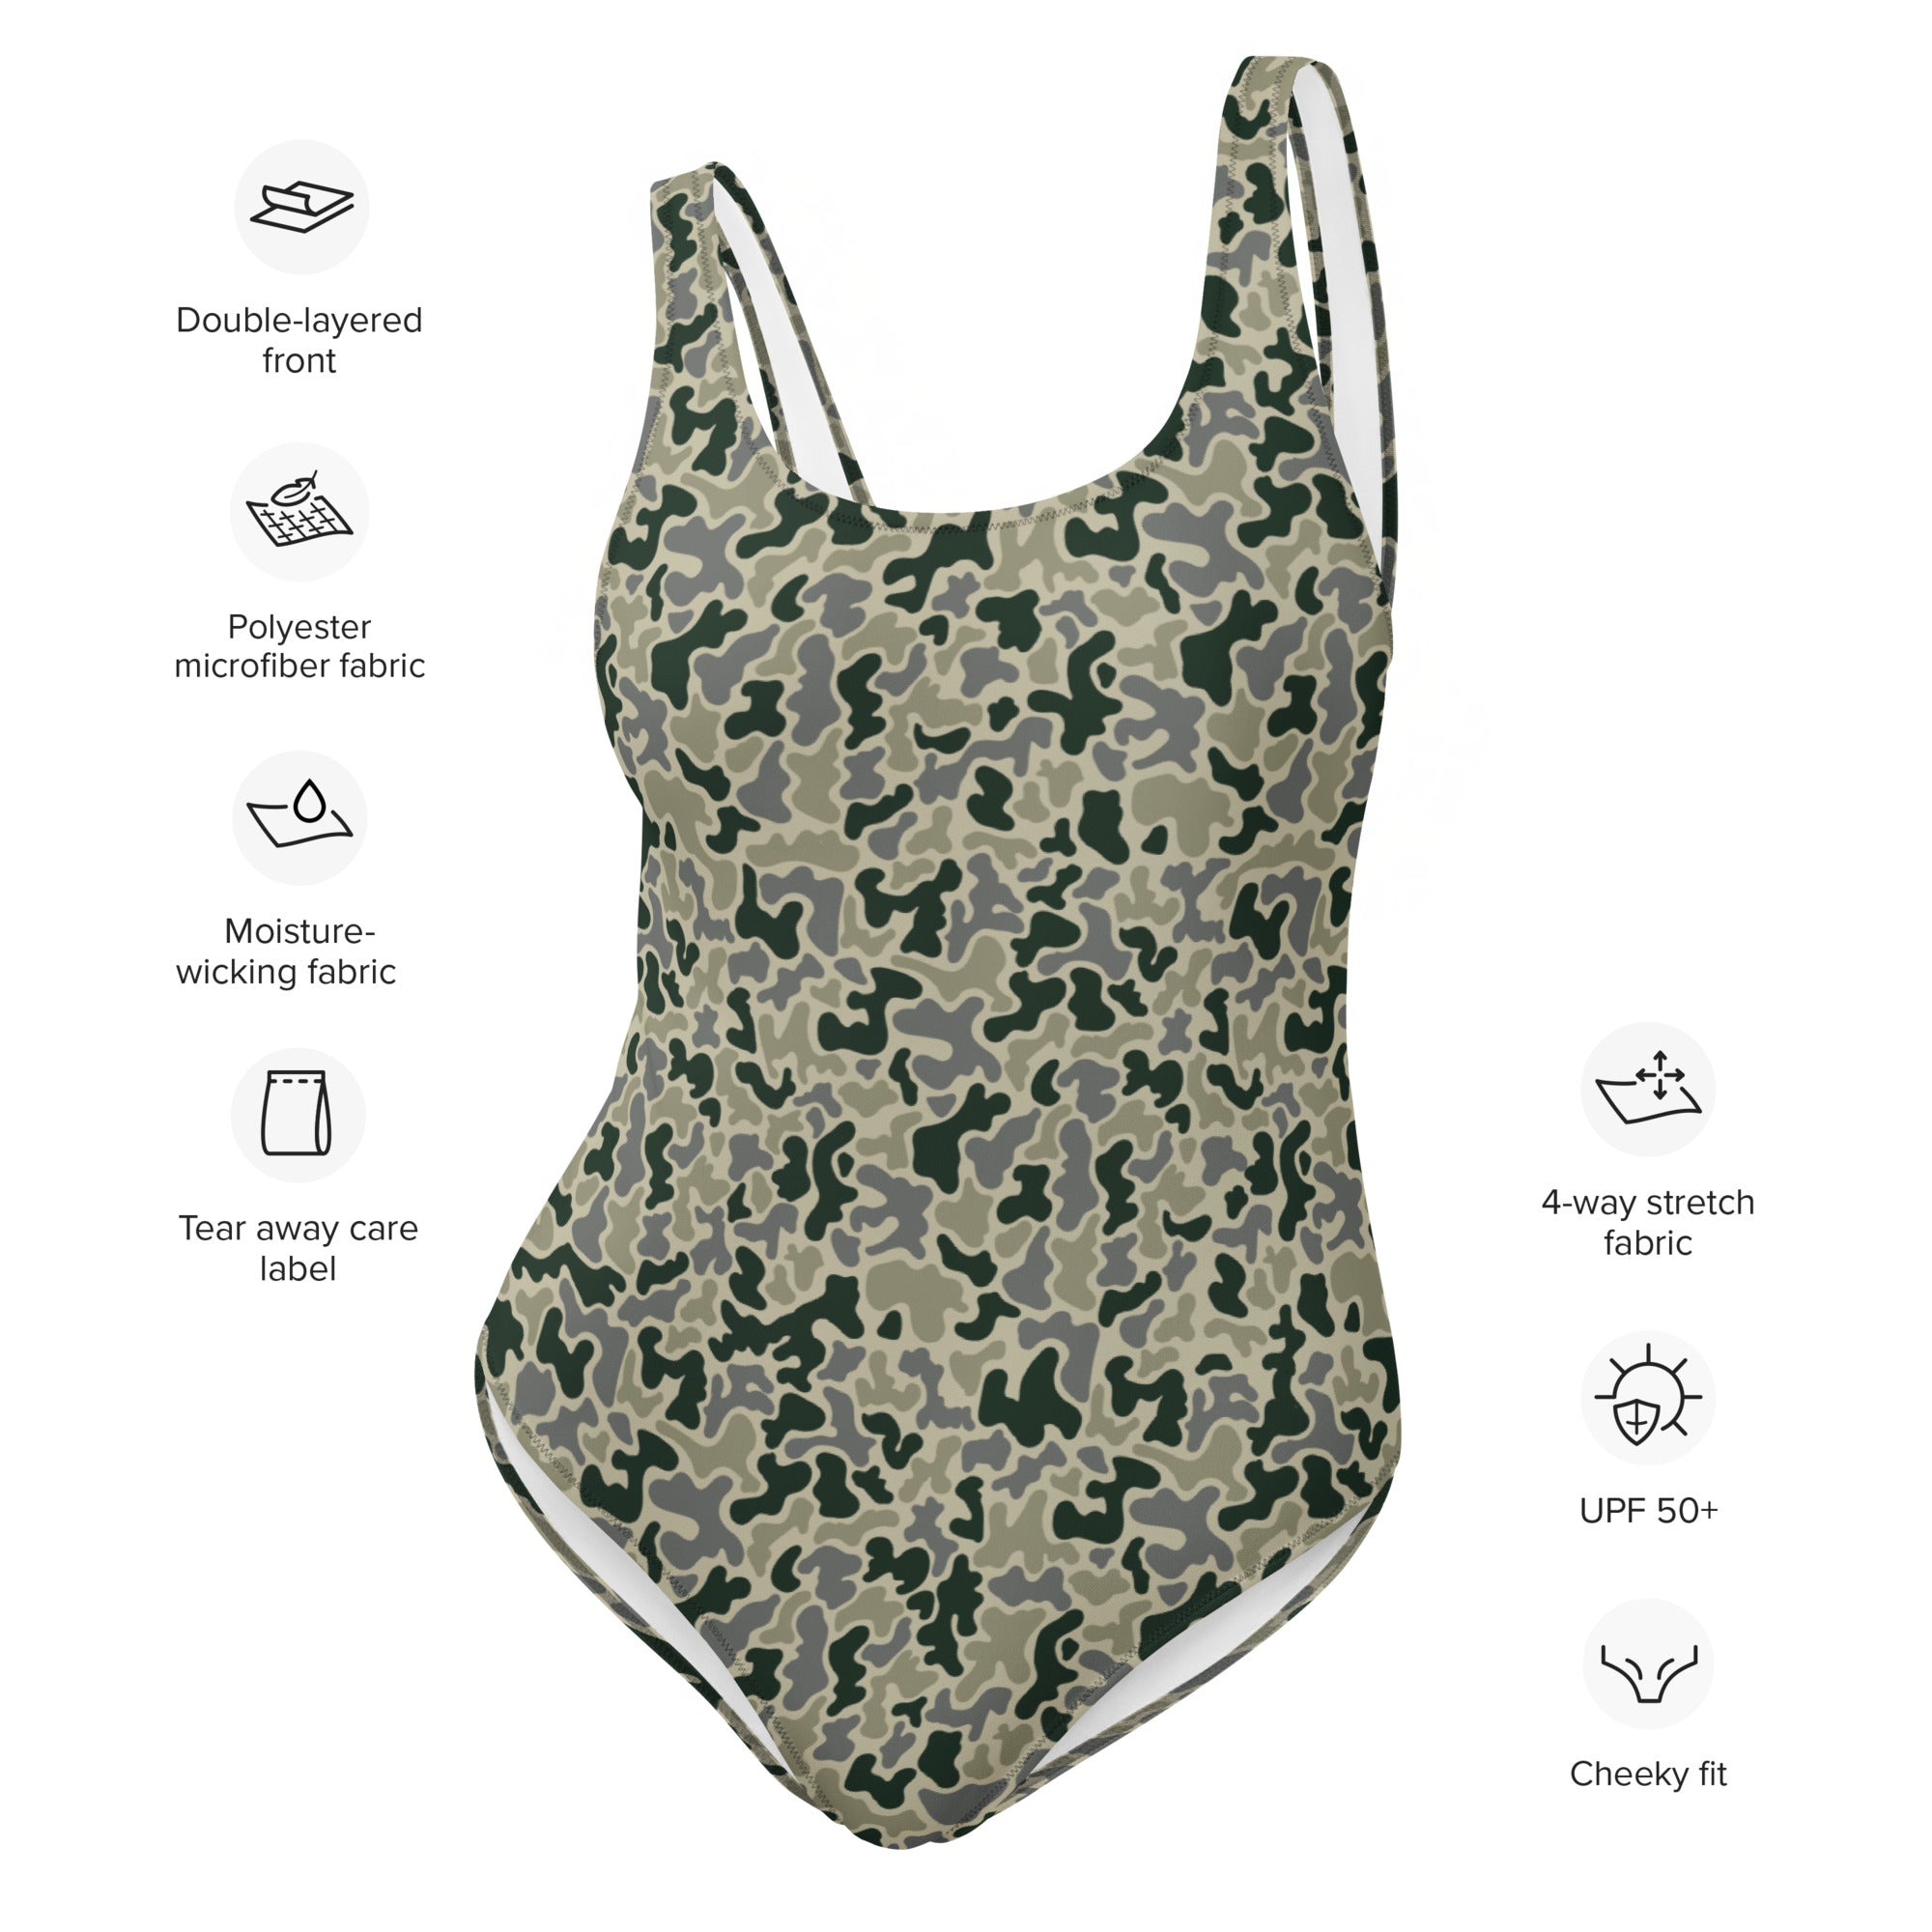 Marshstone CalCam Camo Pattern One-Piece Swimsuit